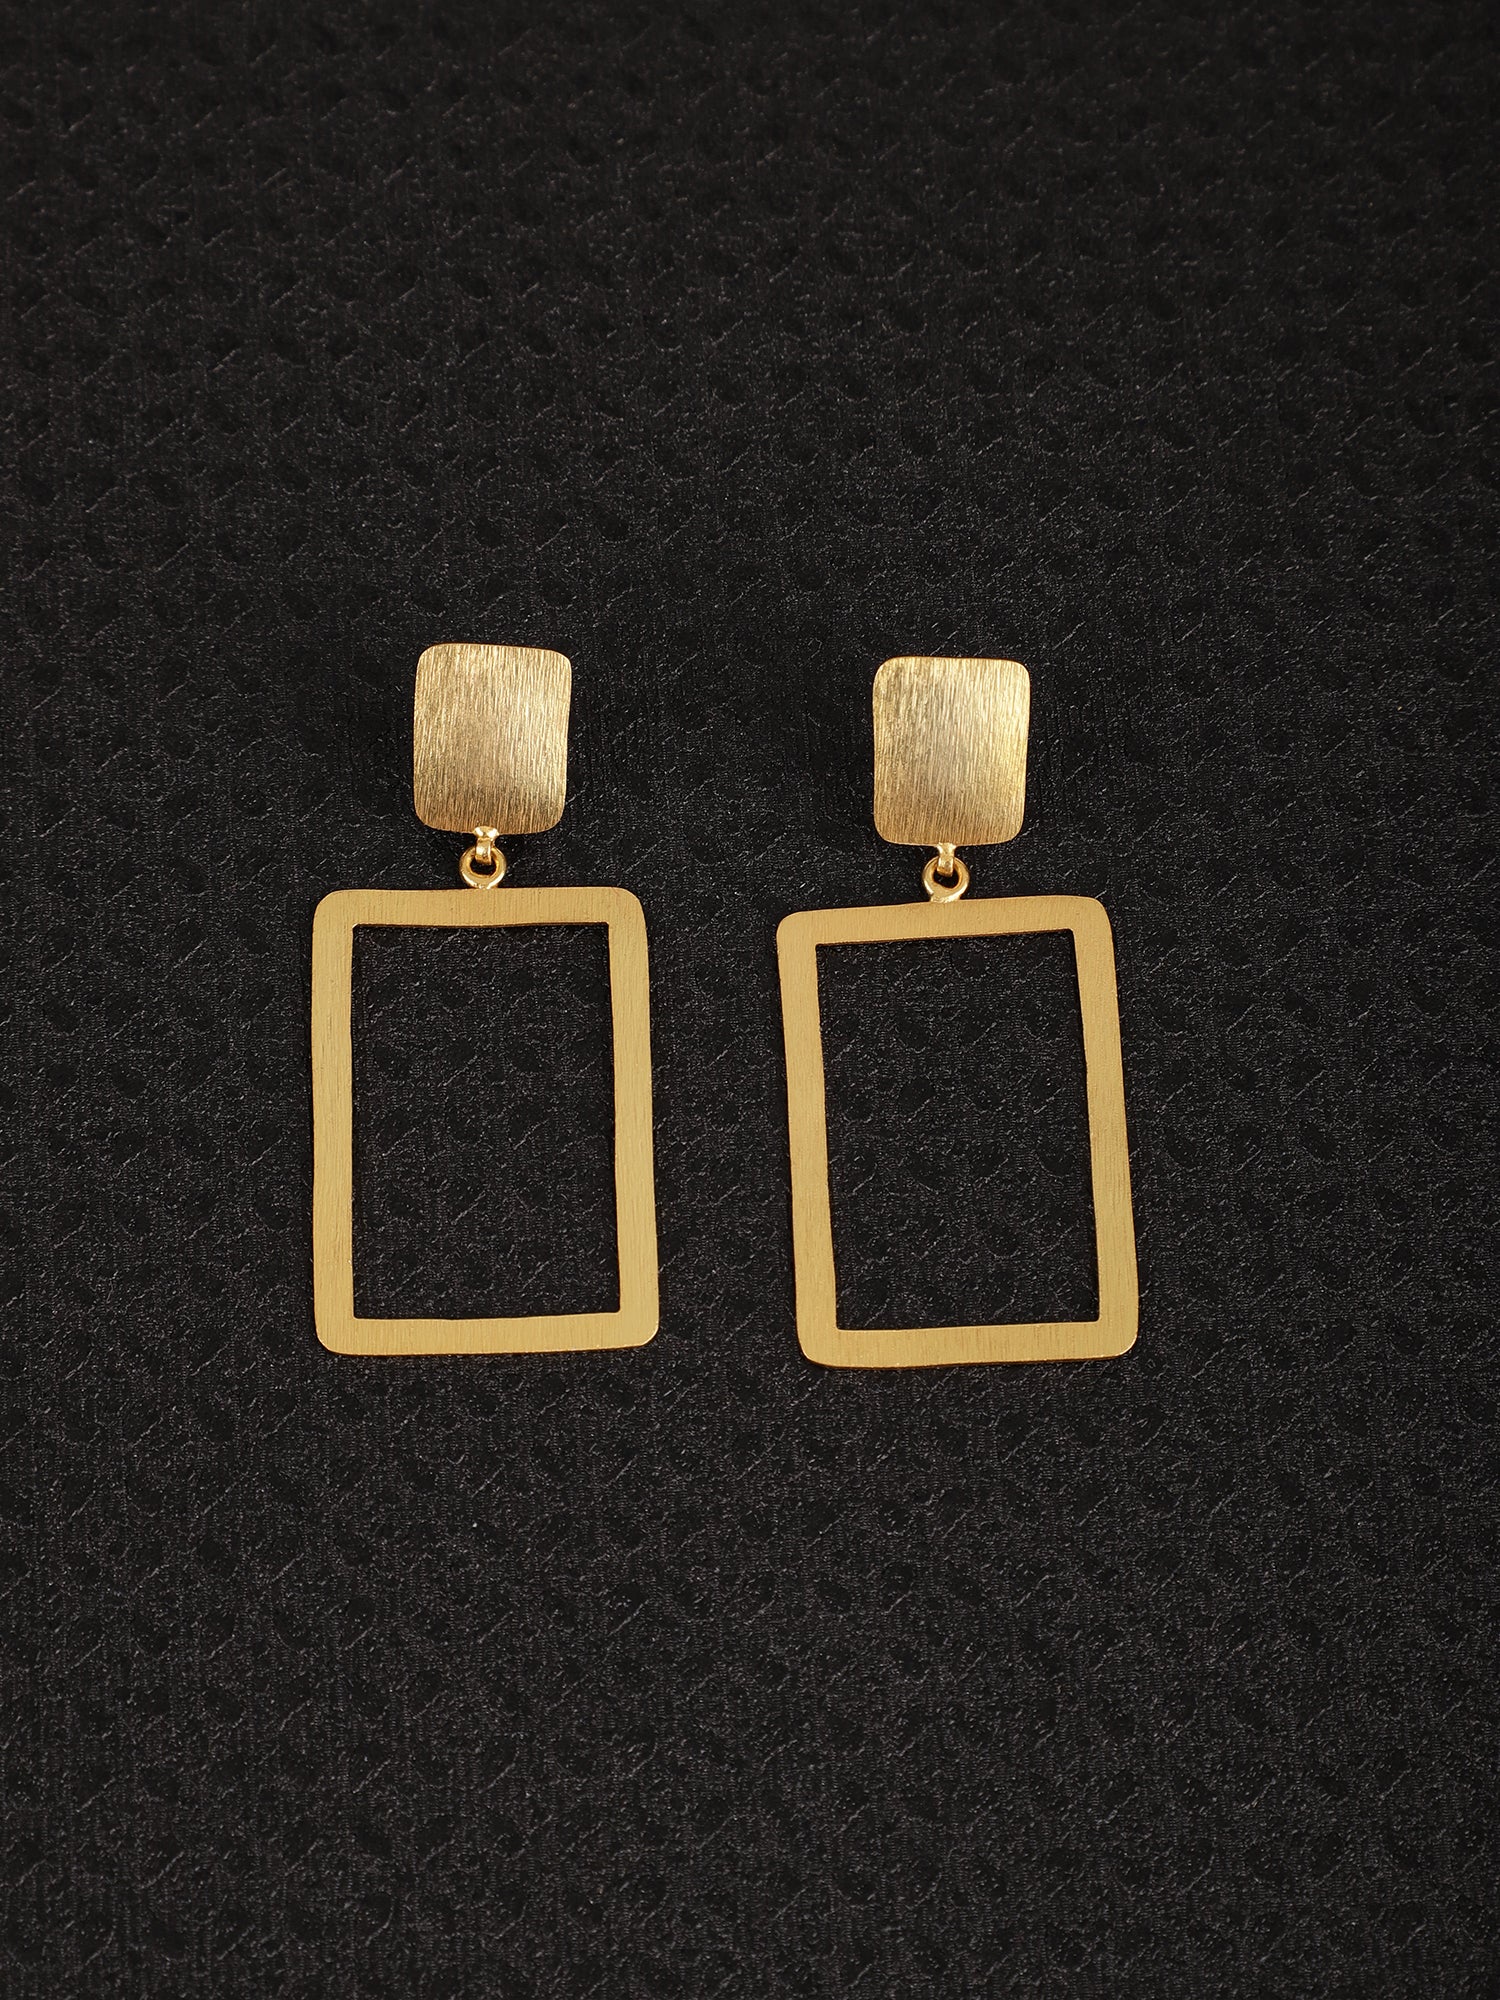 jewelry - berserk - Gold Plated Minimal Rectangular Danglers